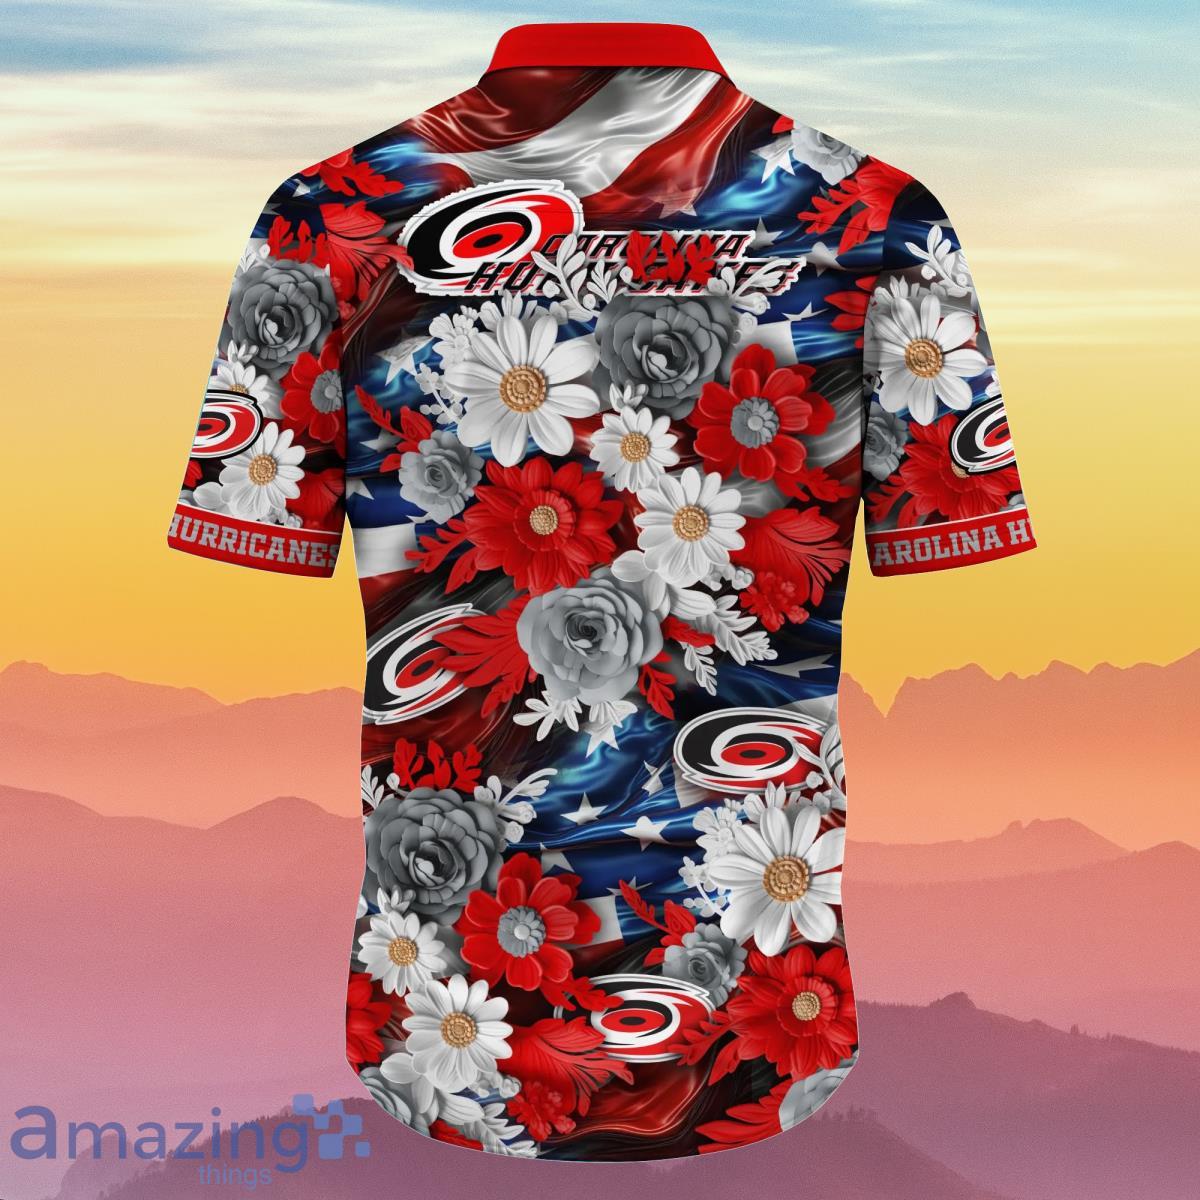 Carolina Hurricanes NHL Custom Name Hawaiian Shirt For Men Women Gift For  Fan - Freedomdesign